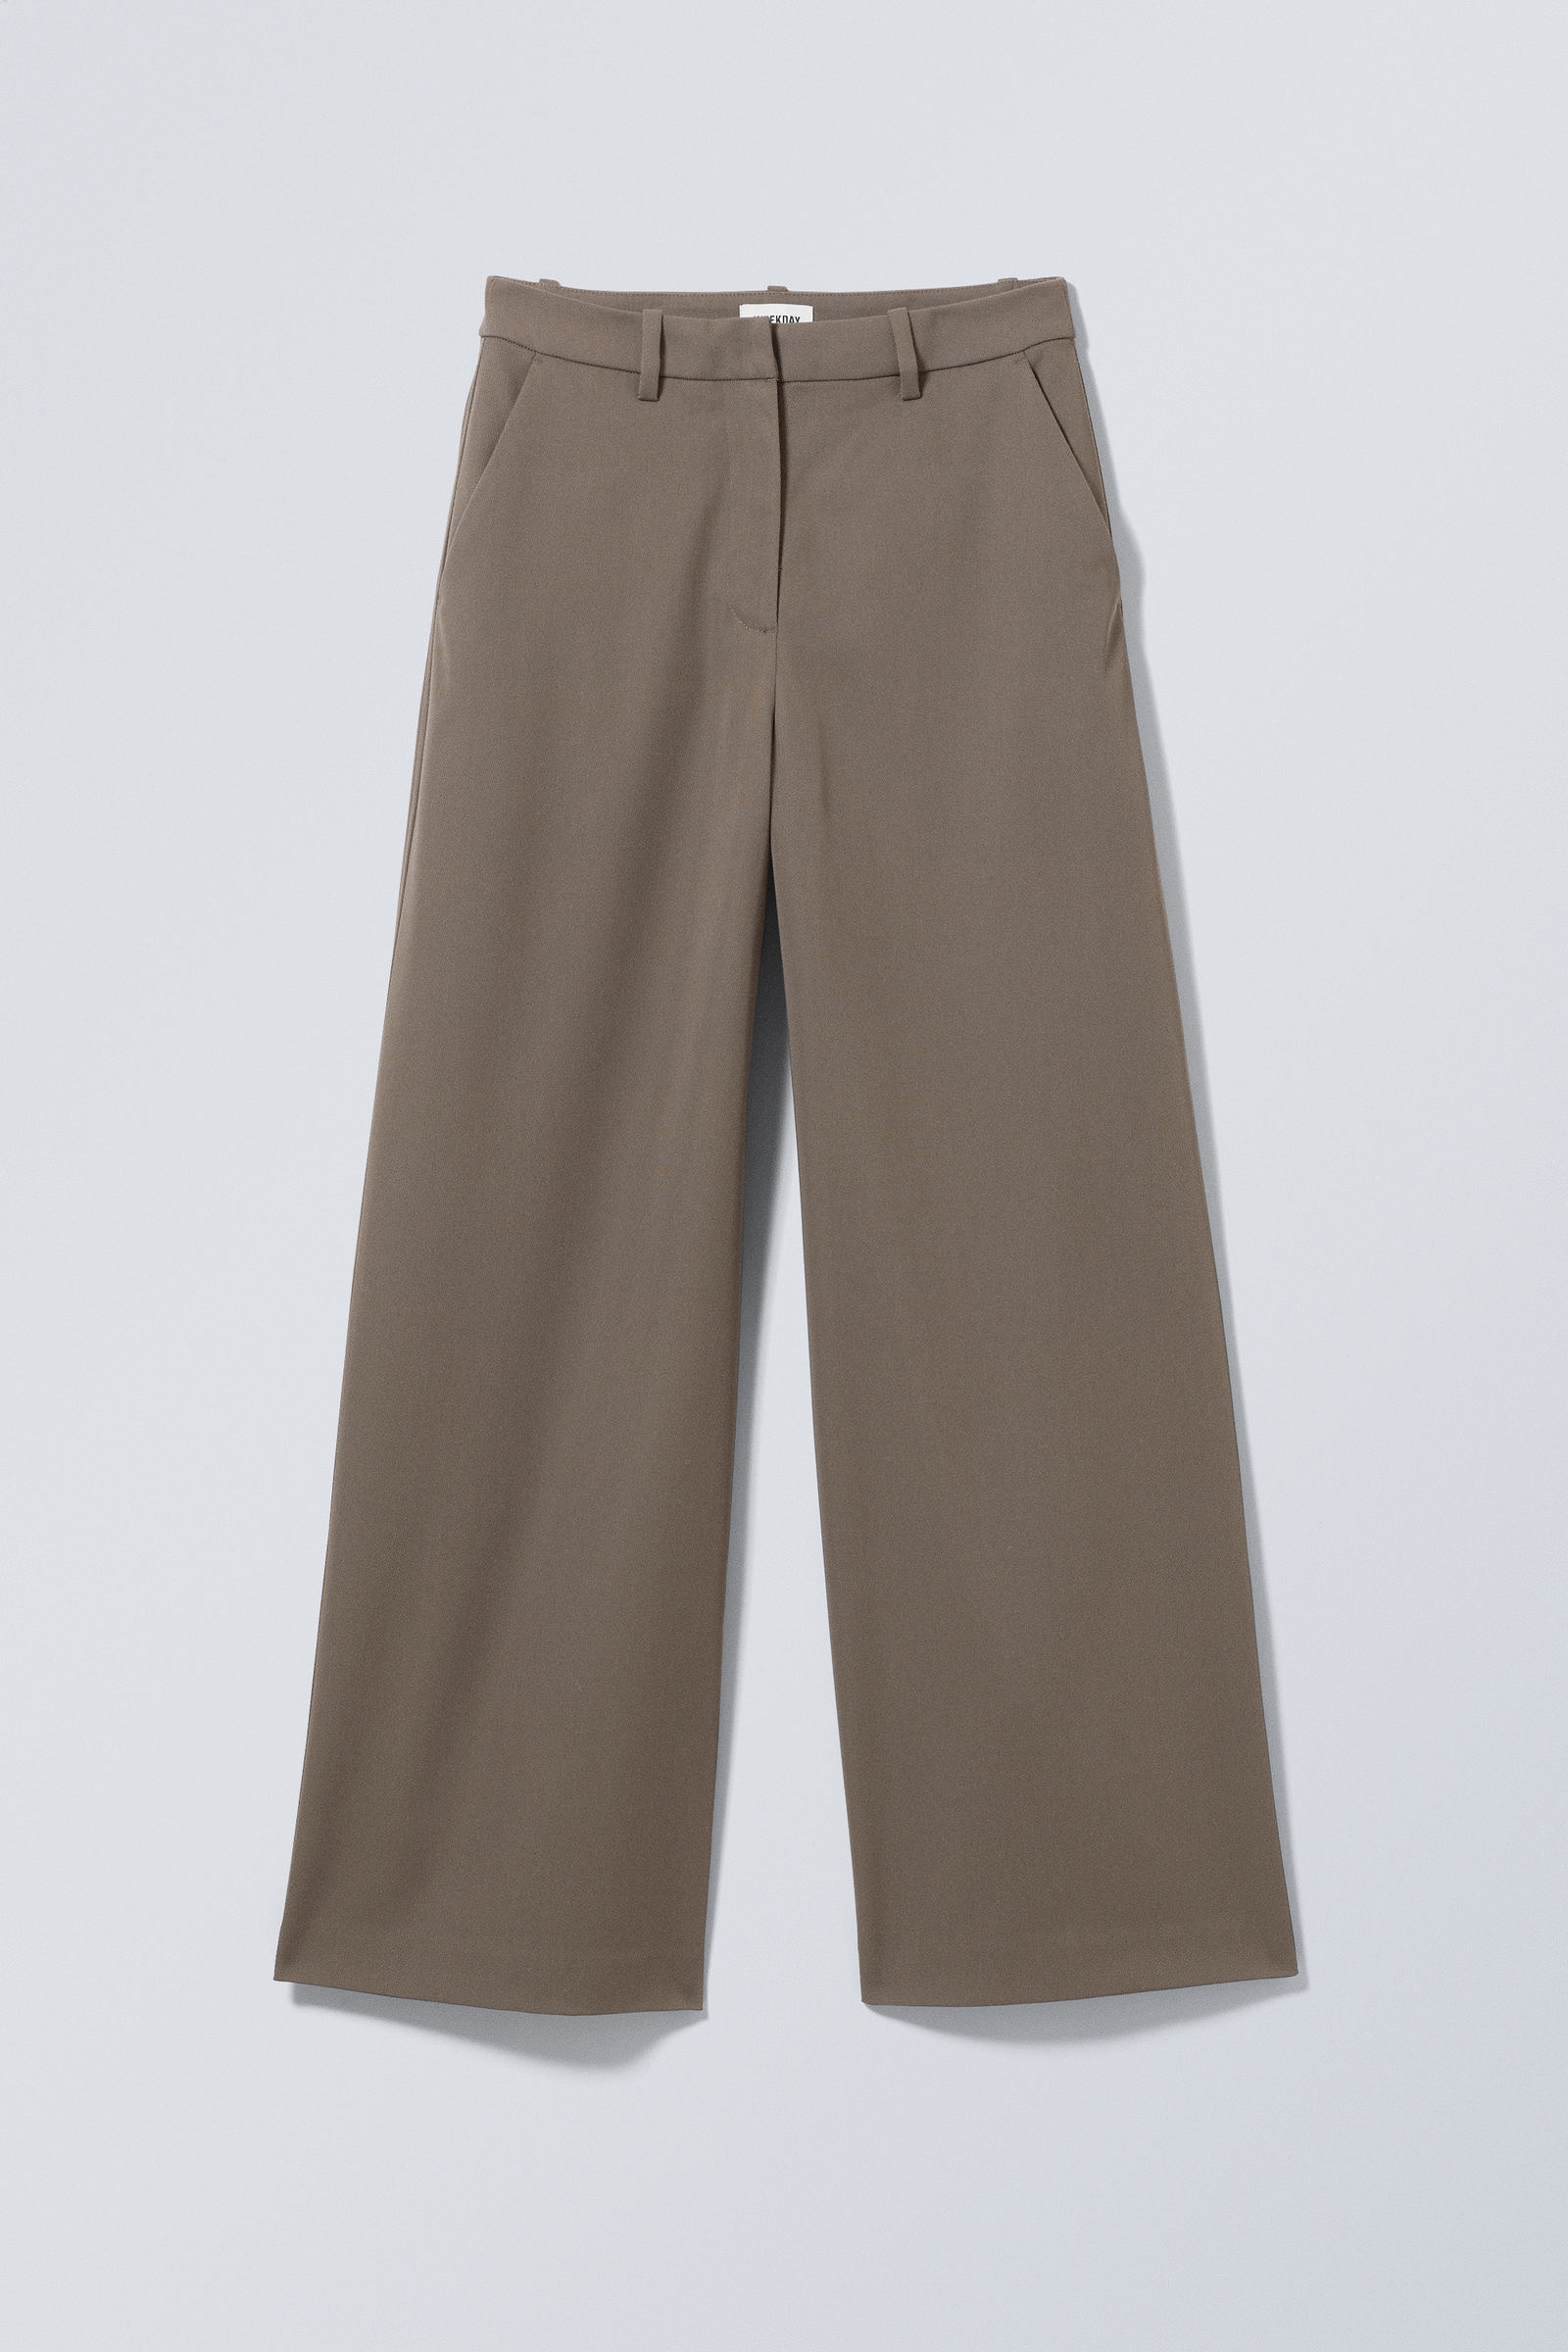 Khaki Green - Tate Suiting Trousers - 0